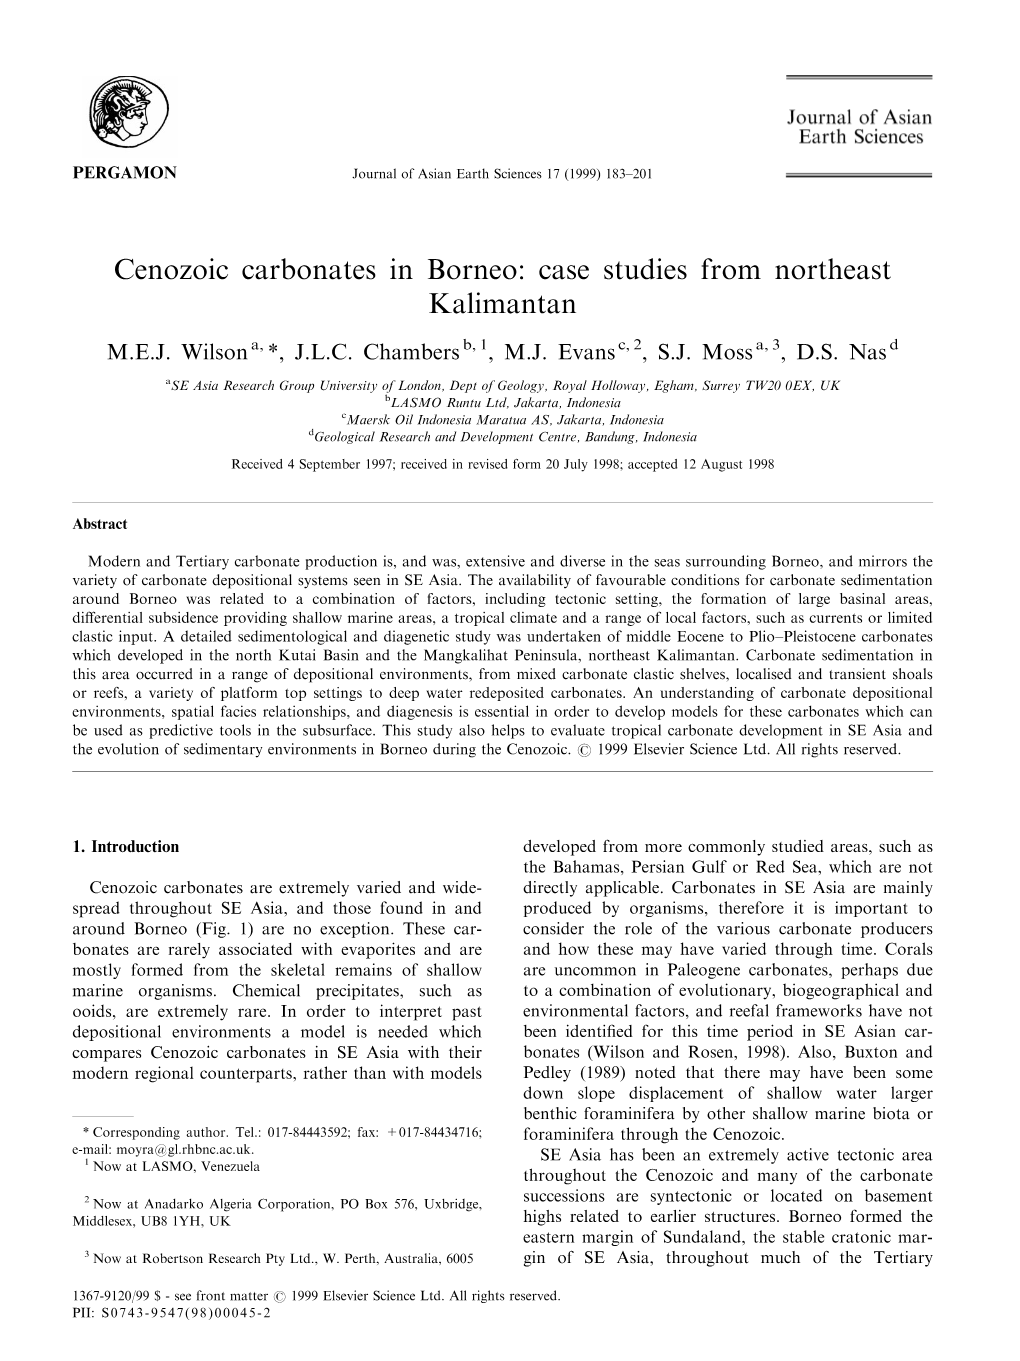 Cenozoic Carbonates in Borneo: Case Studies from Northeast Kalimantan